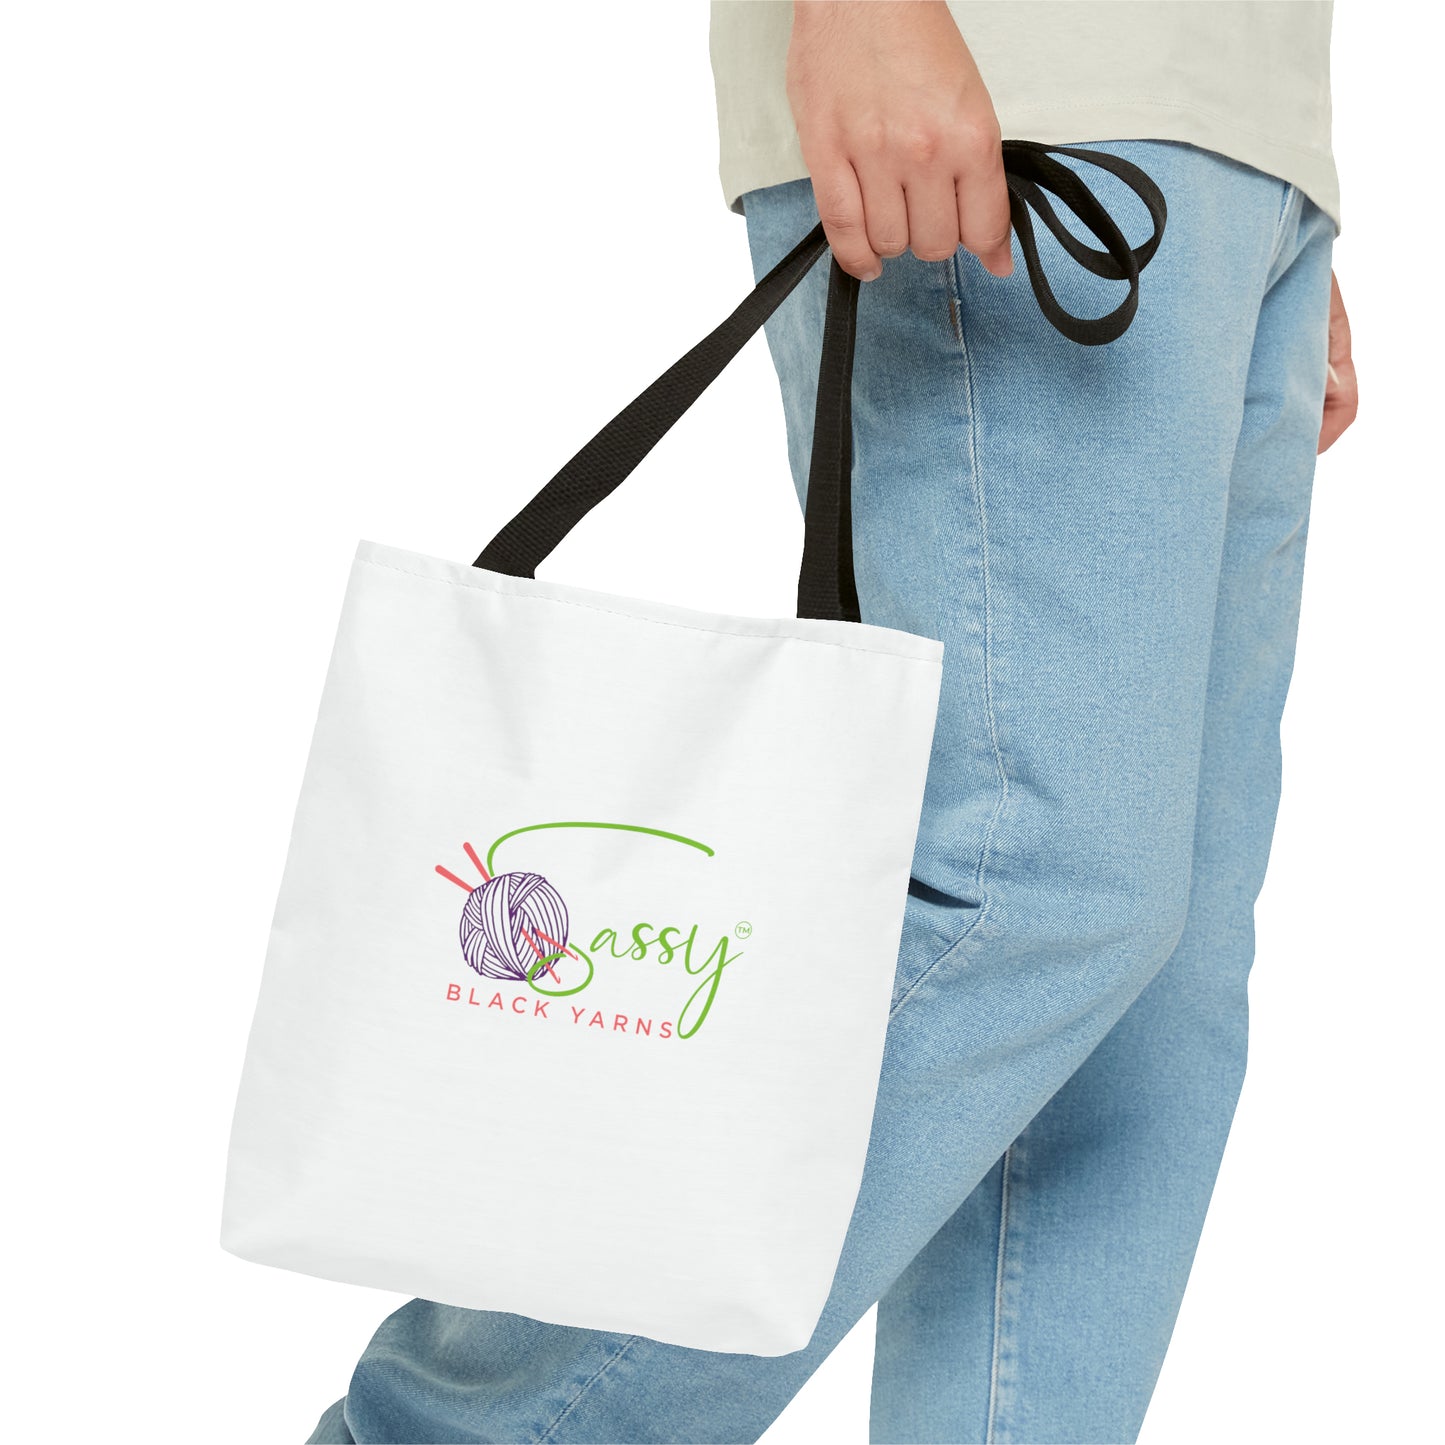 Sassy Black Yarns - Colored Handle Tote Bags